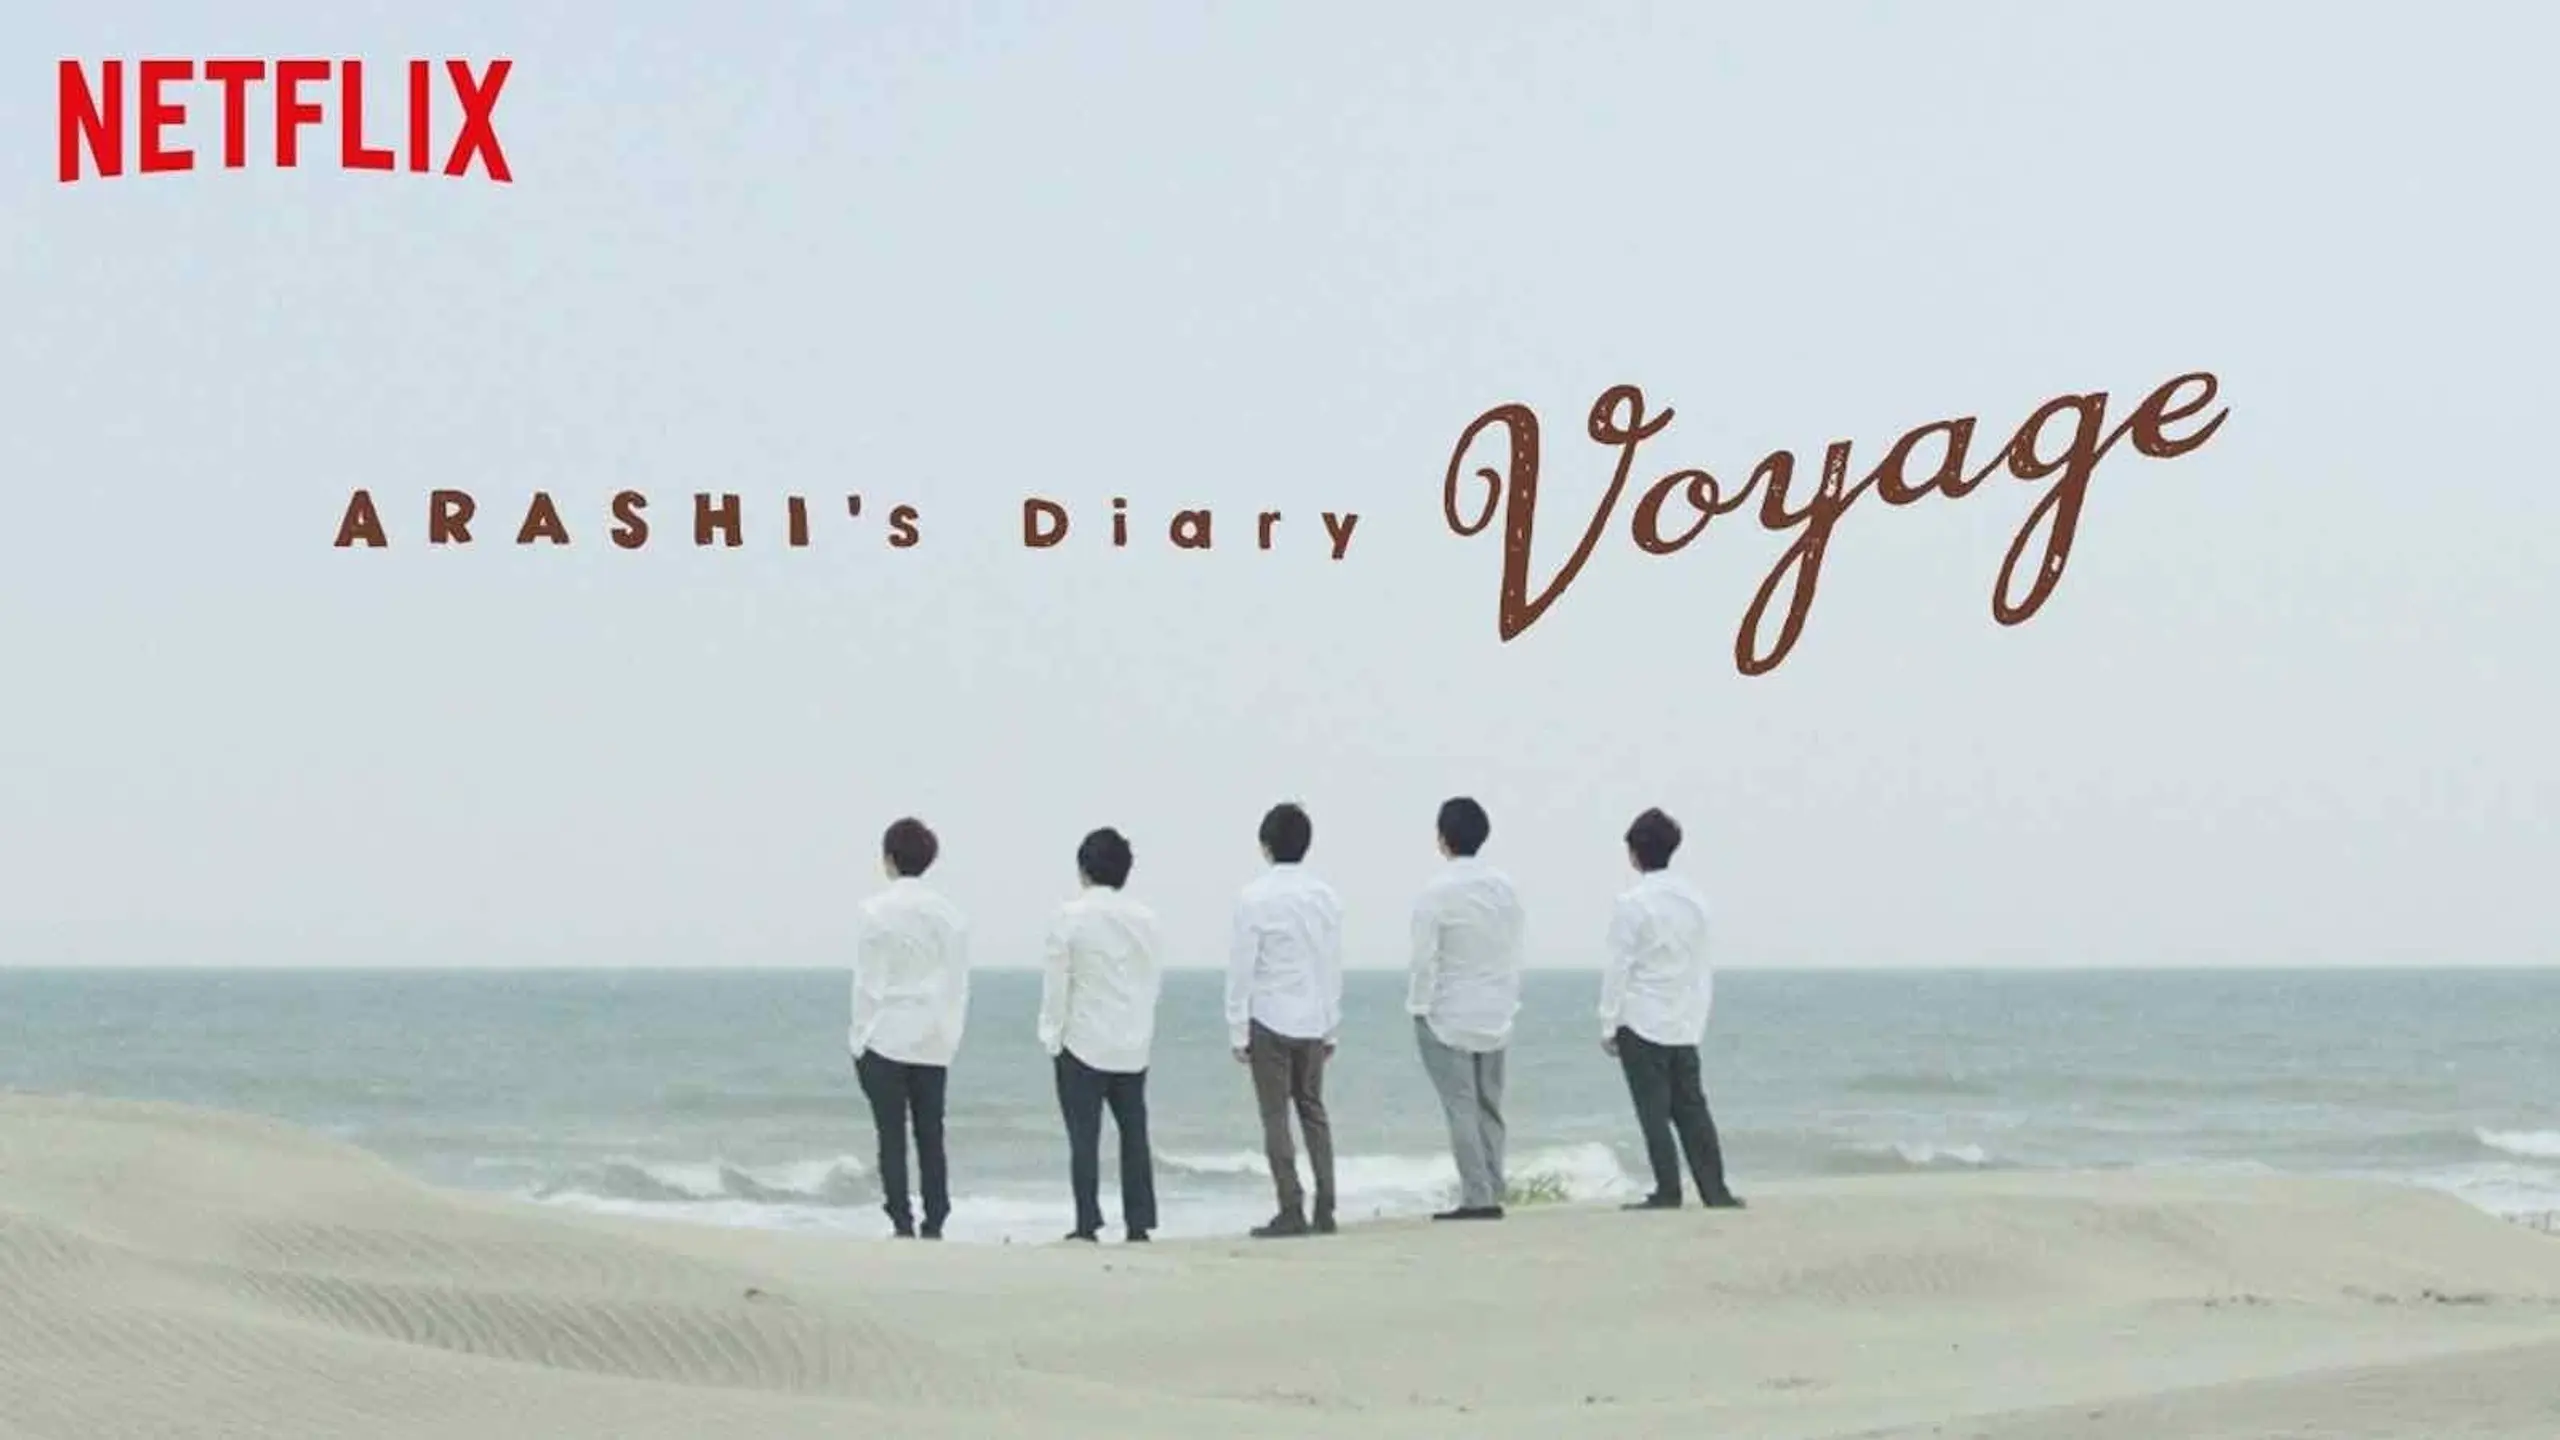 ARASHI's Diary -Voyage-